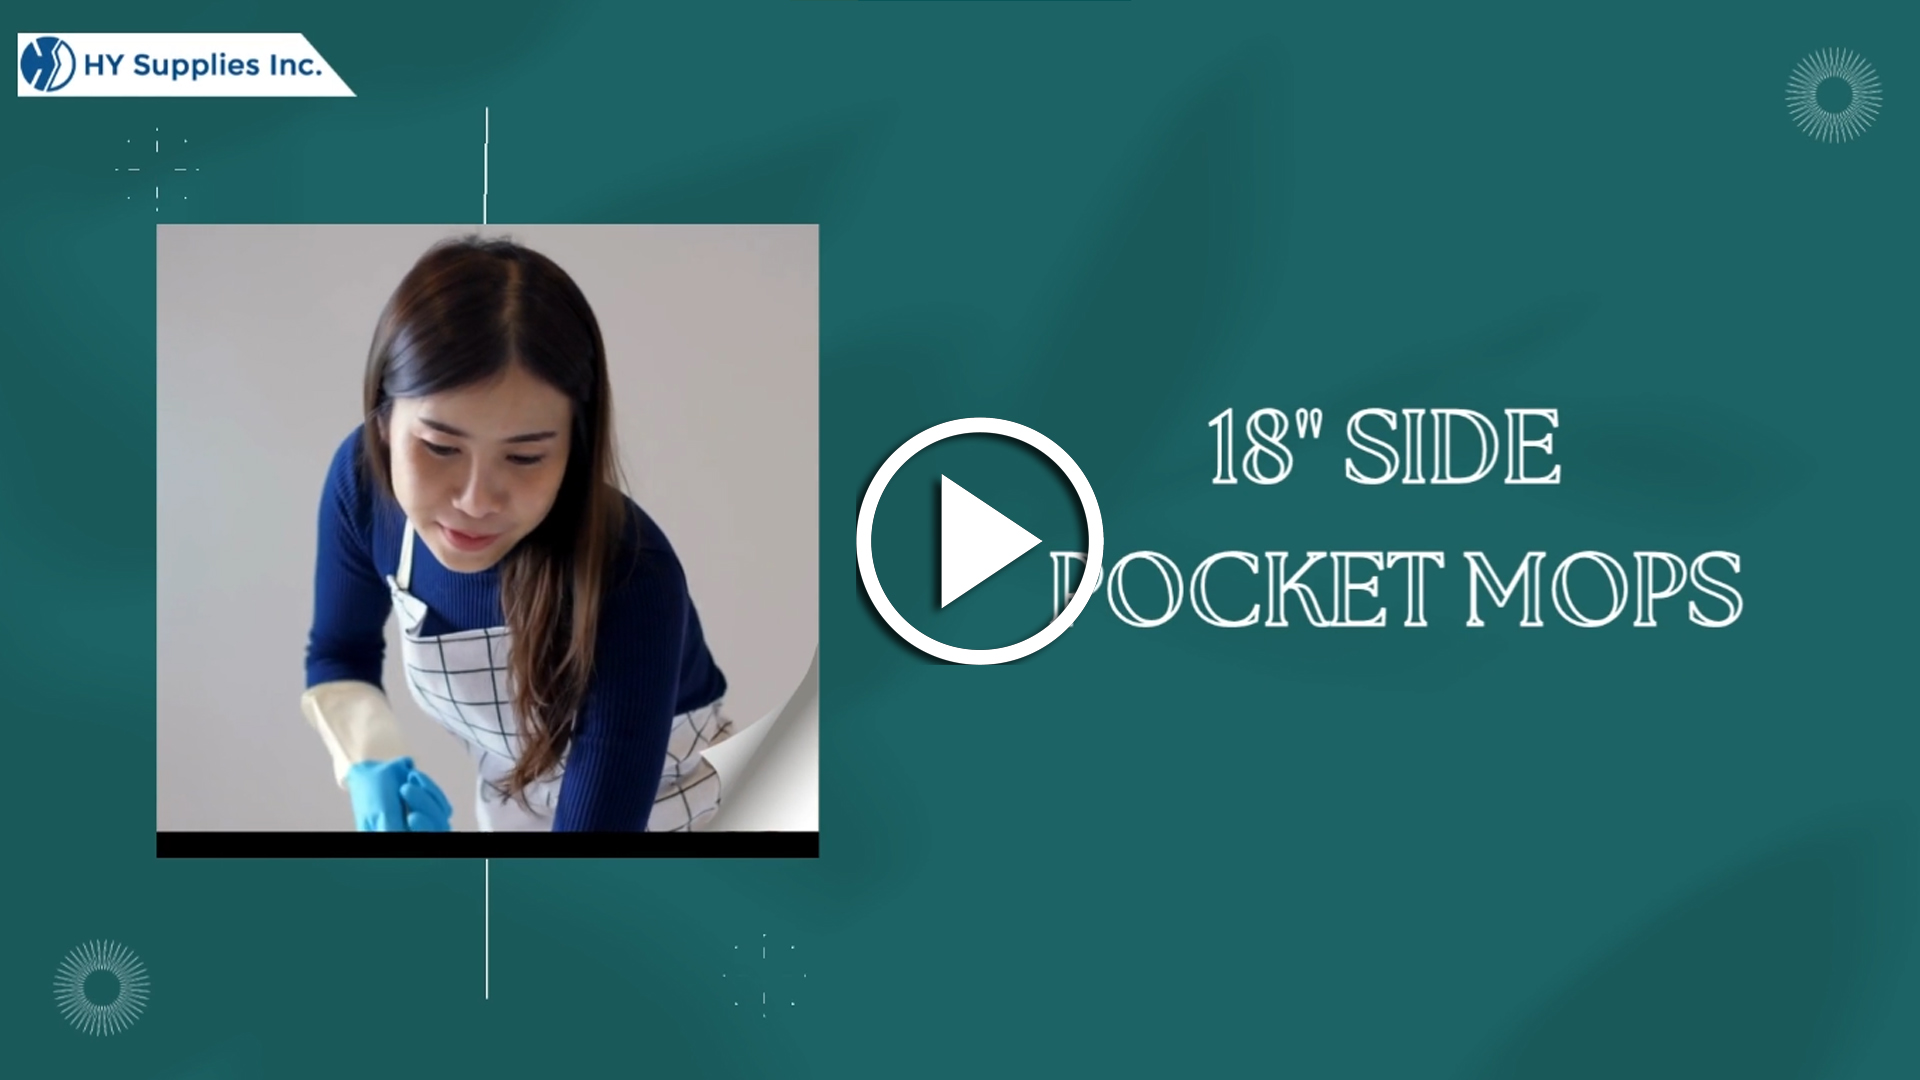 18"" Side Pocket Mops